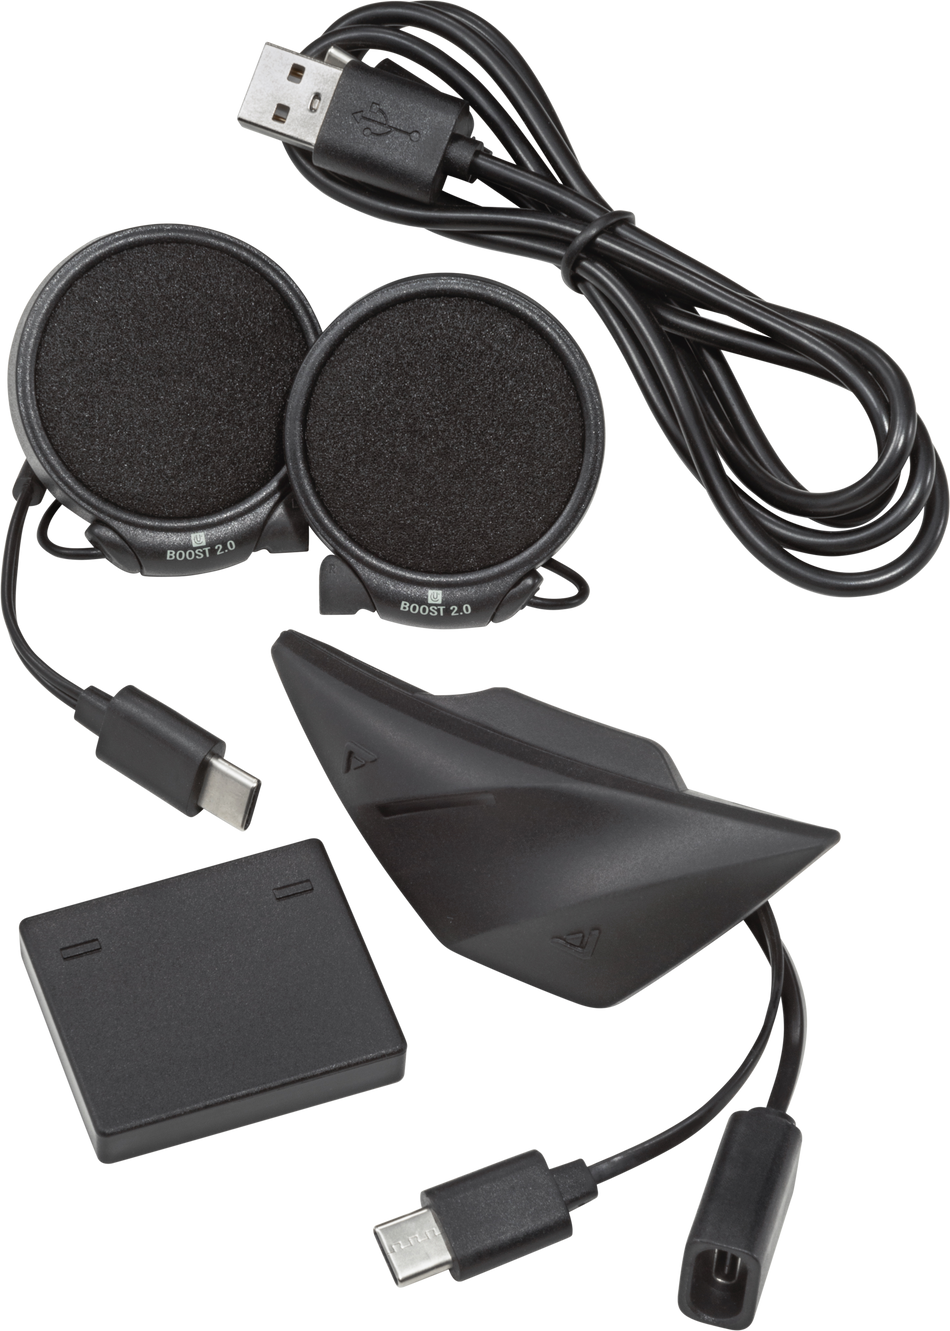 SCORPION EXO Exo-Com Bluetooth Communicator Kit (Fits At960/T520/ Gt930) COM-338104